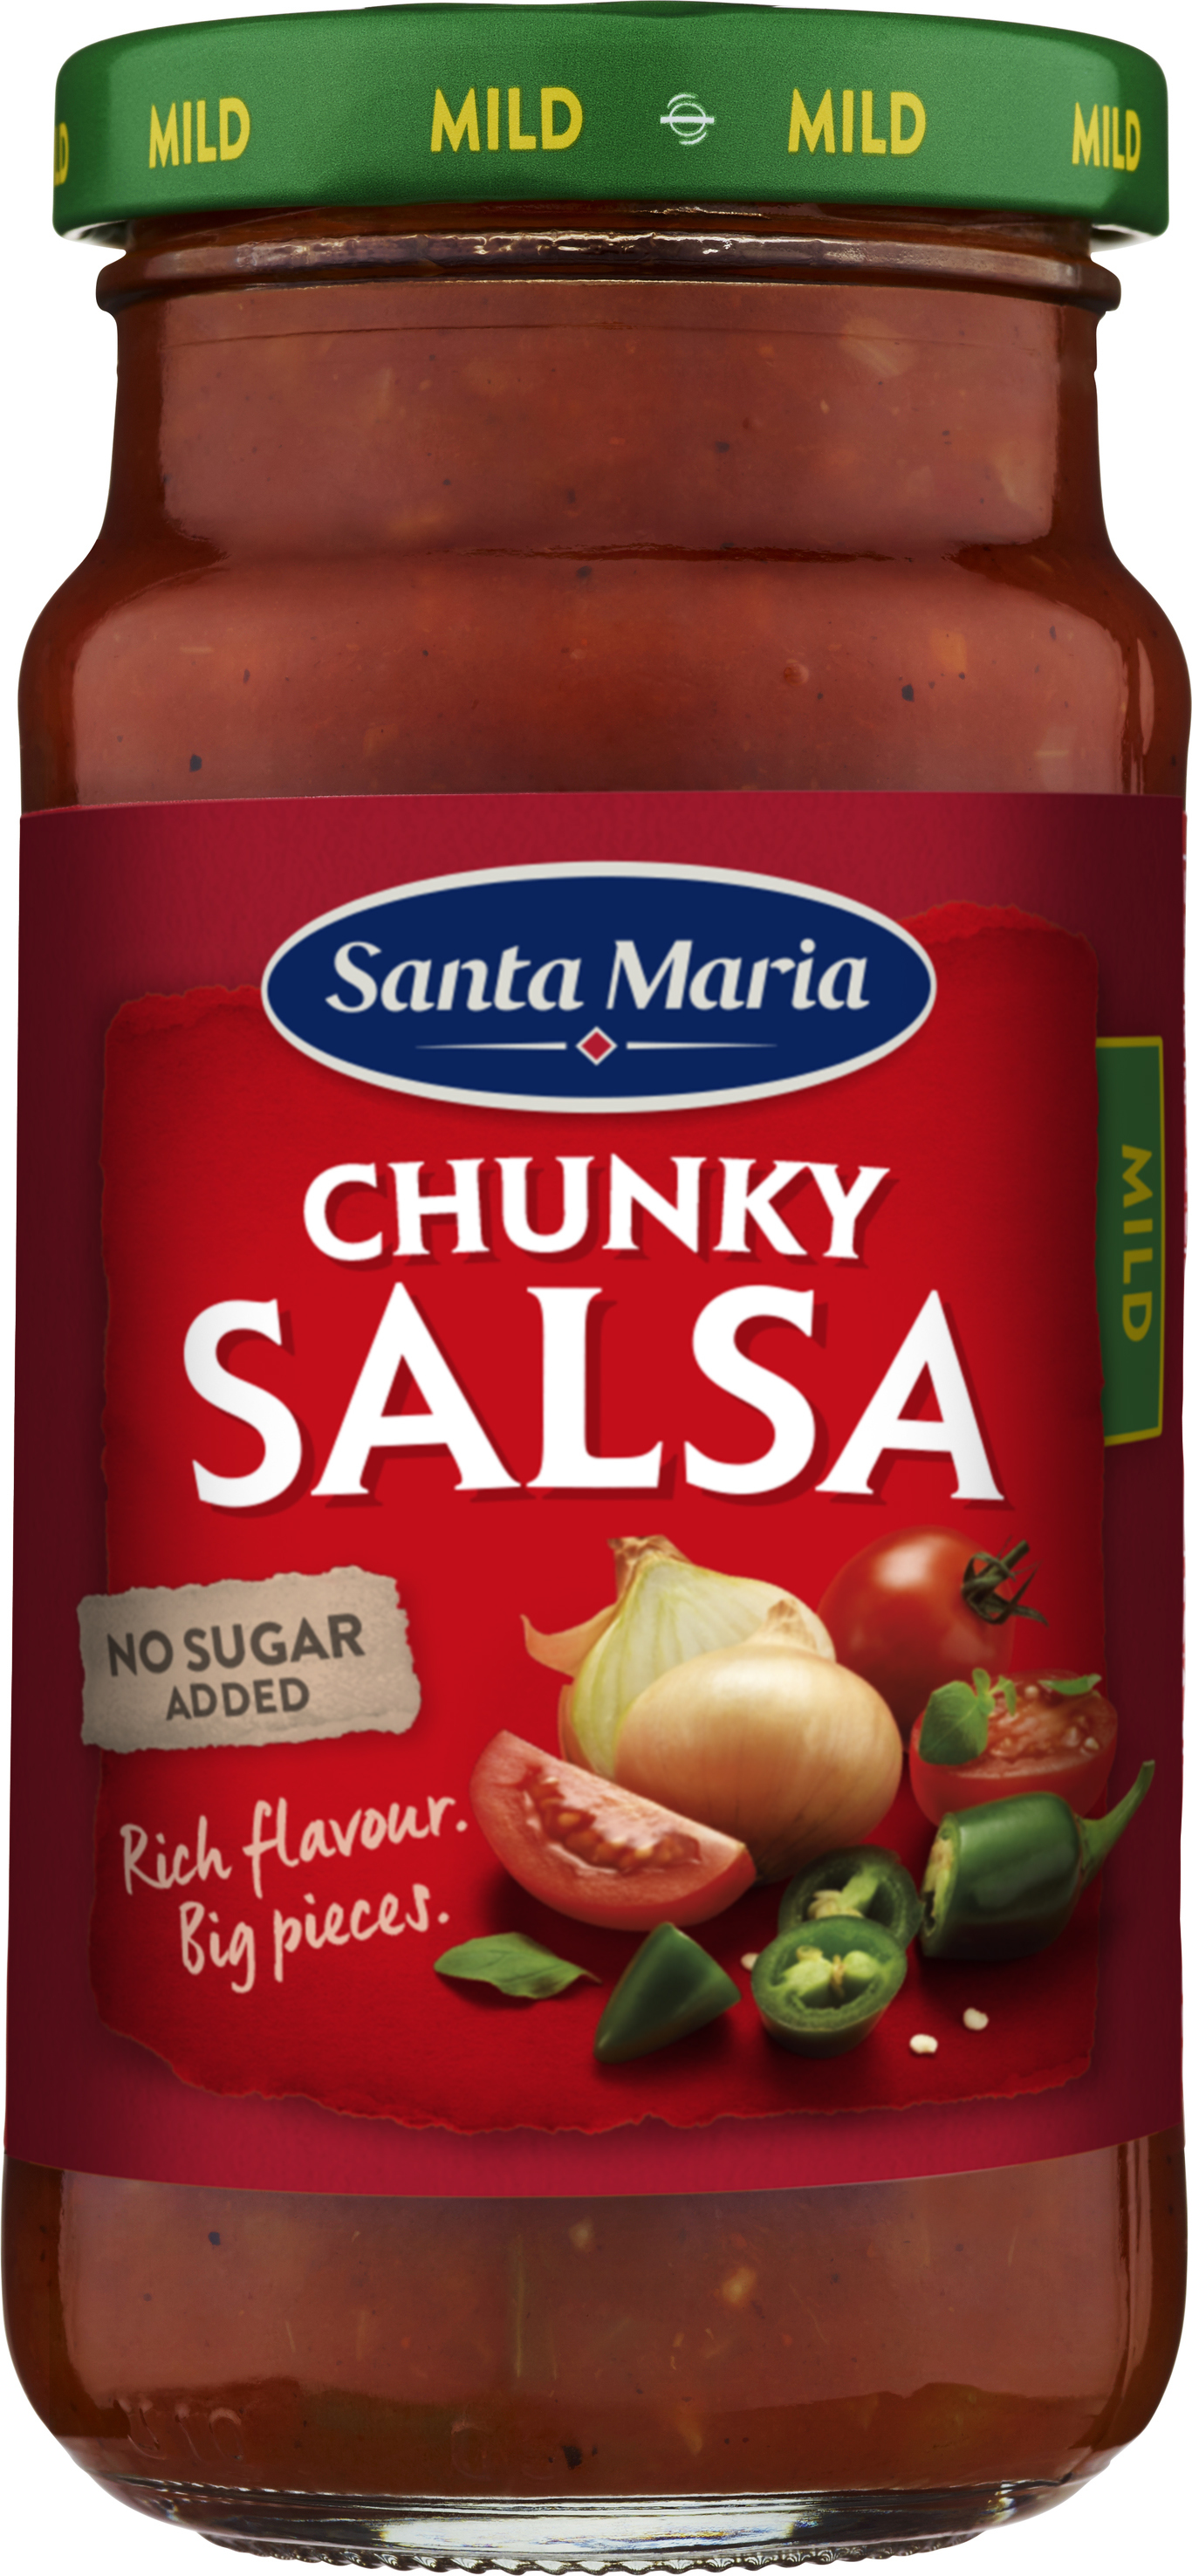 Chunky Salsa Mild